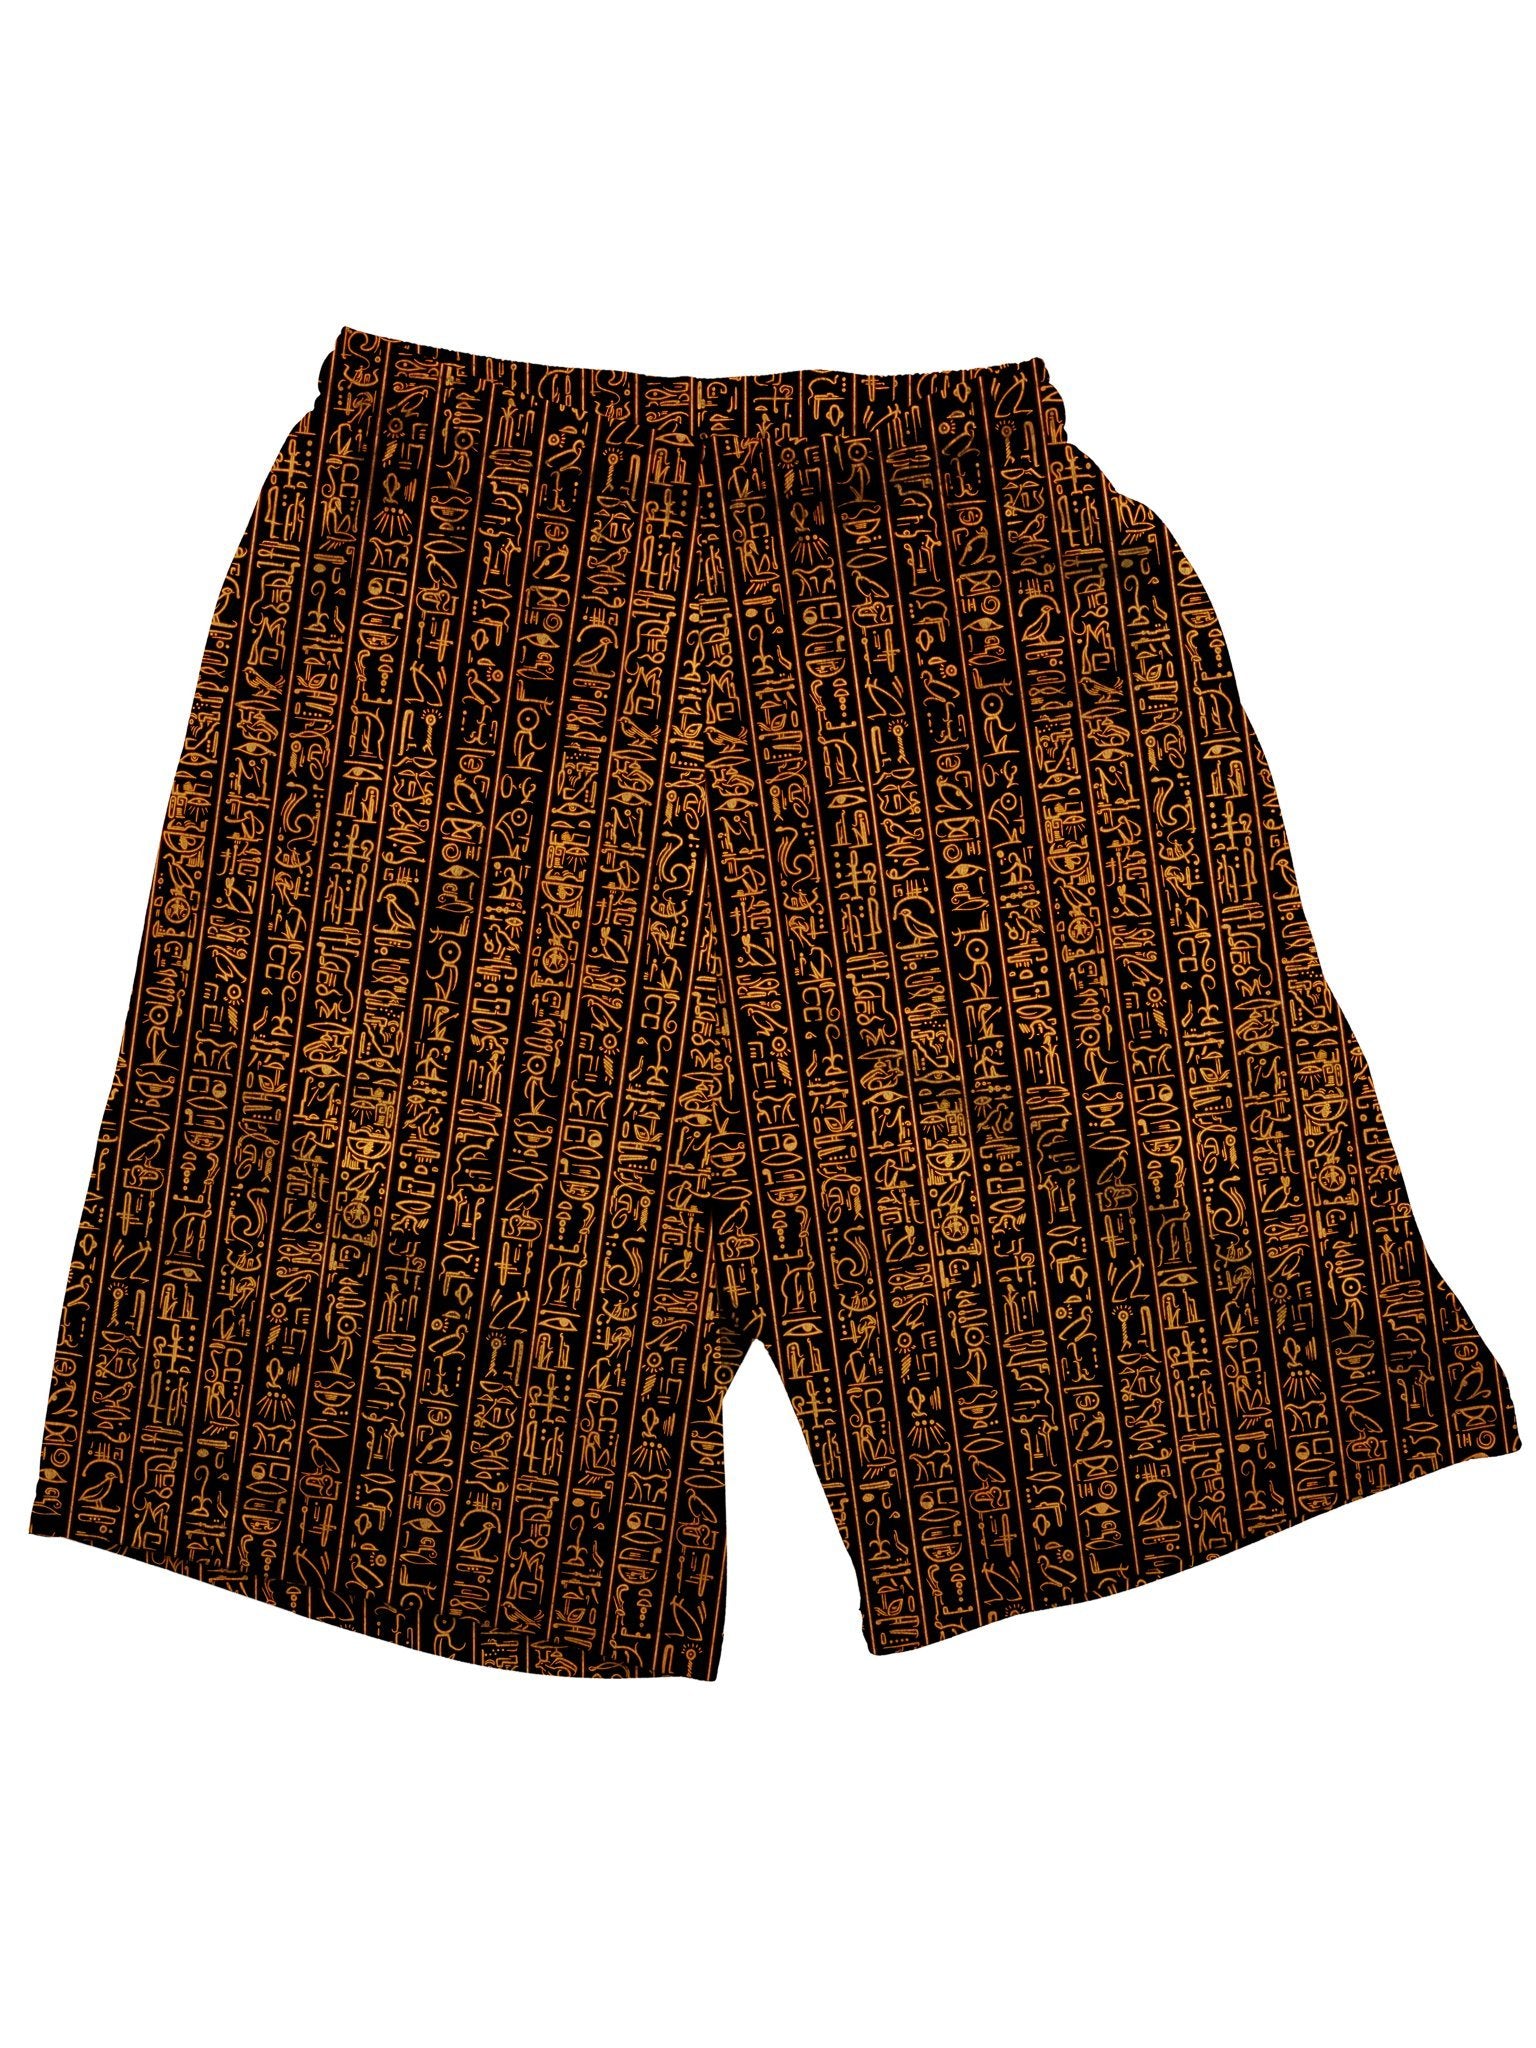 Electro Threads Egyptian Glyphs (Golden) Shorts